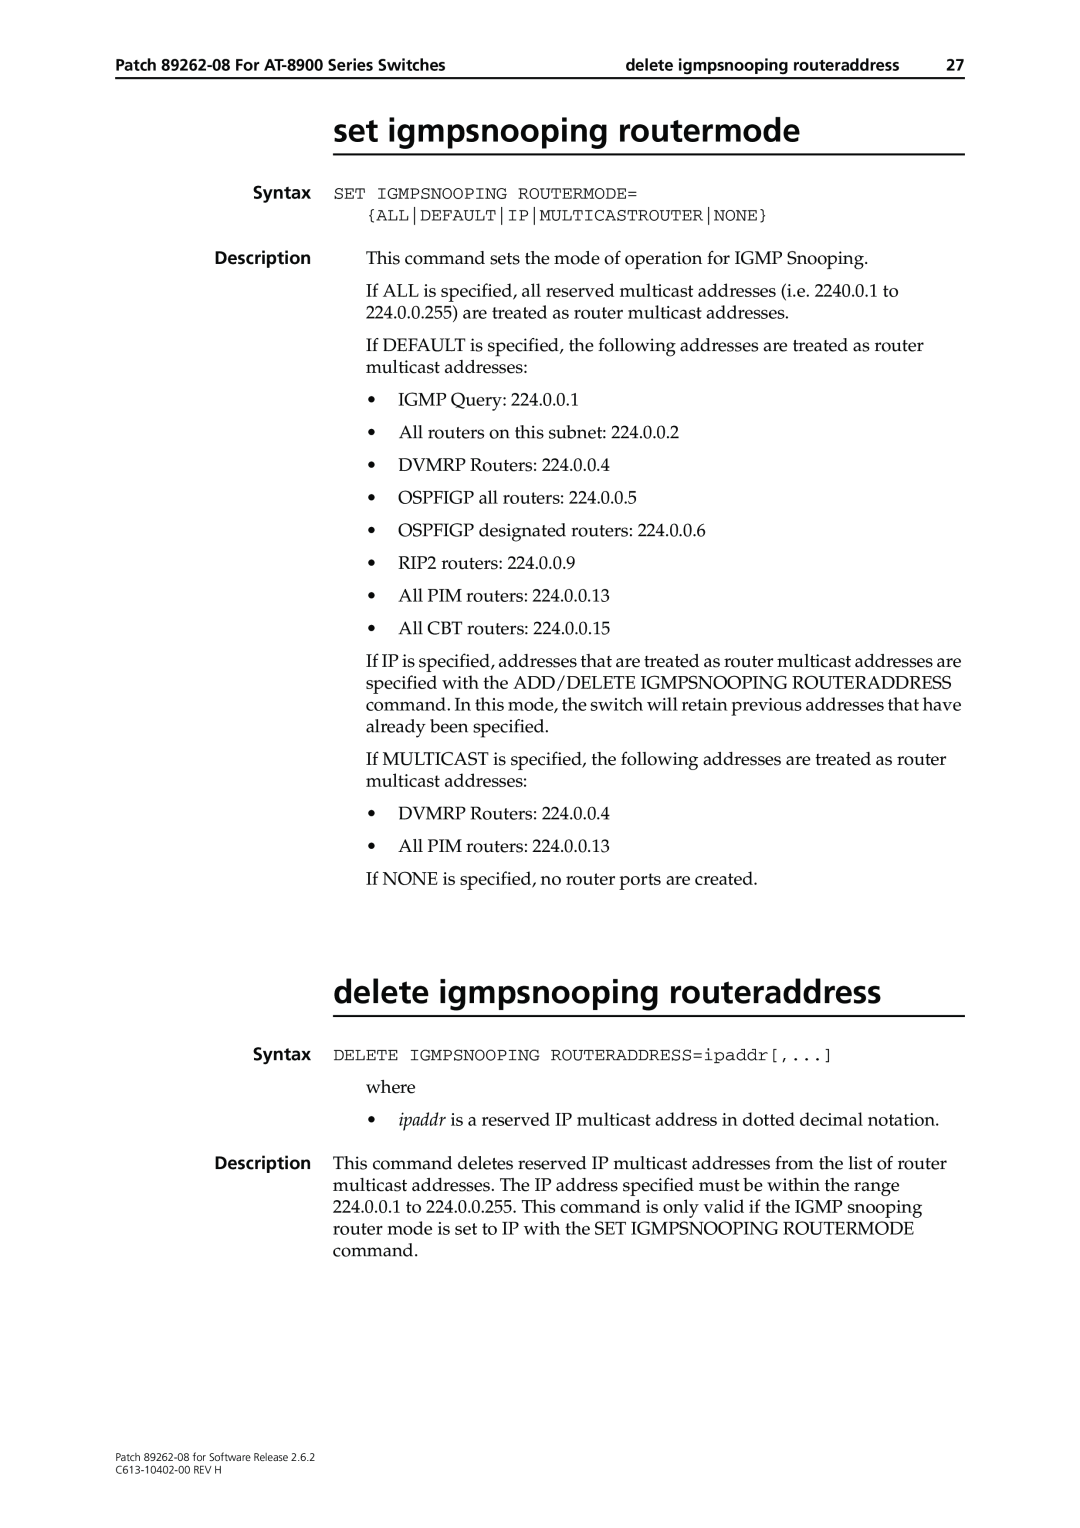 Allied Telesis Patch 89262-08 manual set igmpsnooping routermode, delete igmpsnooping routeraddress 